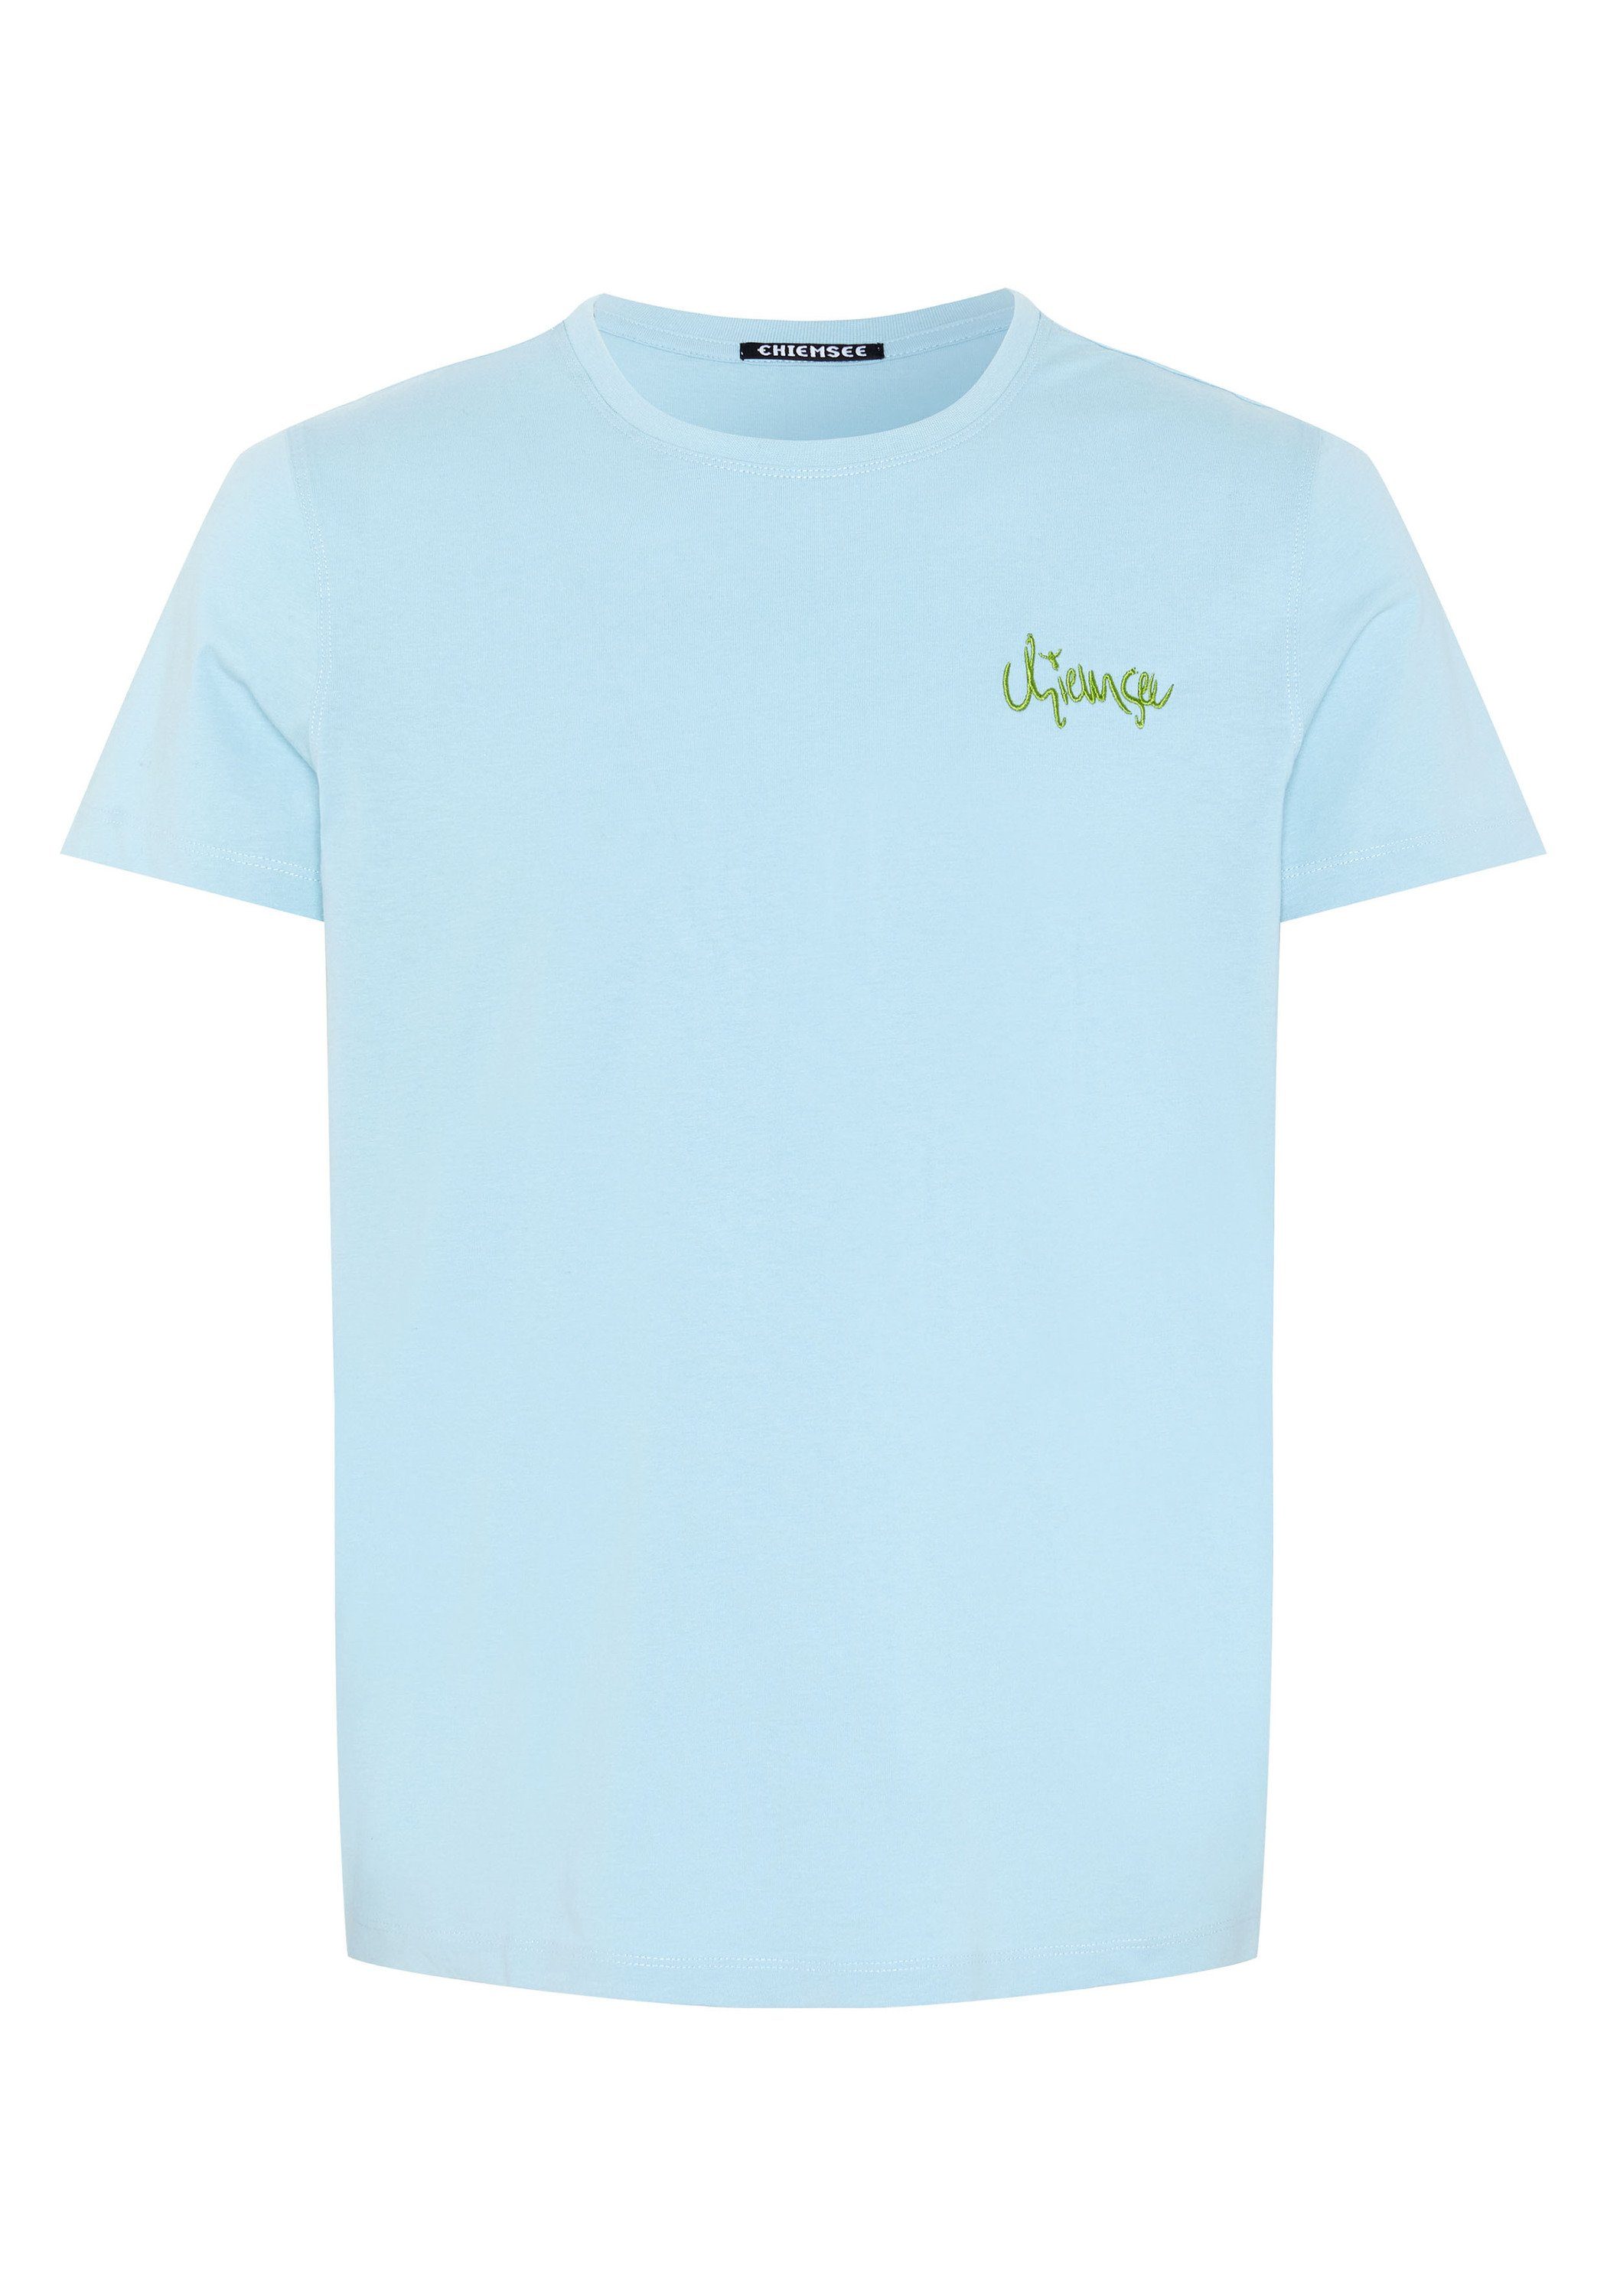 Chiemsee Print-Shirt T-Shirt mit Blattmotiv und Schriftzug 1 Sky Blue